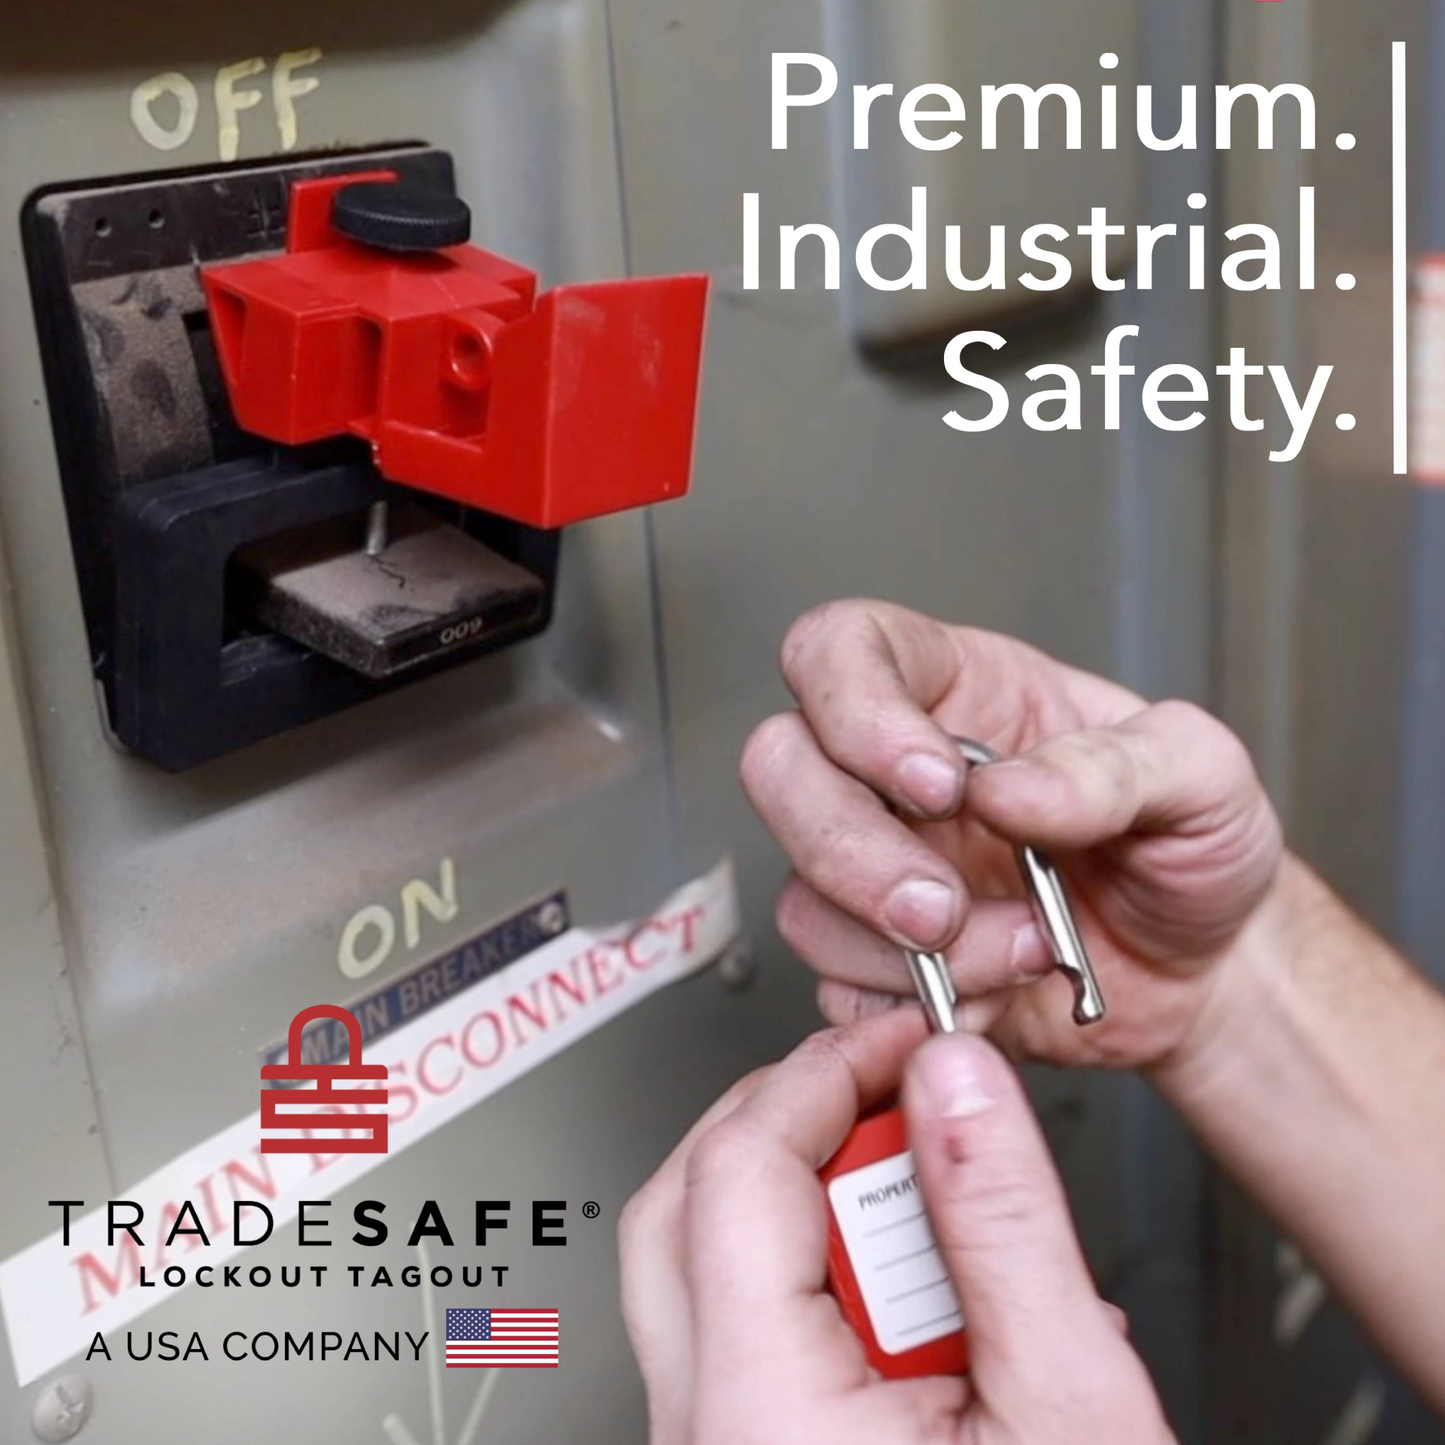 tradesafe lockout tagout branding image; premium. industrial. safety.